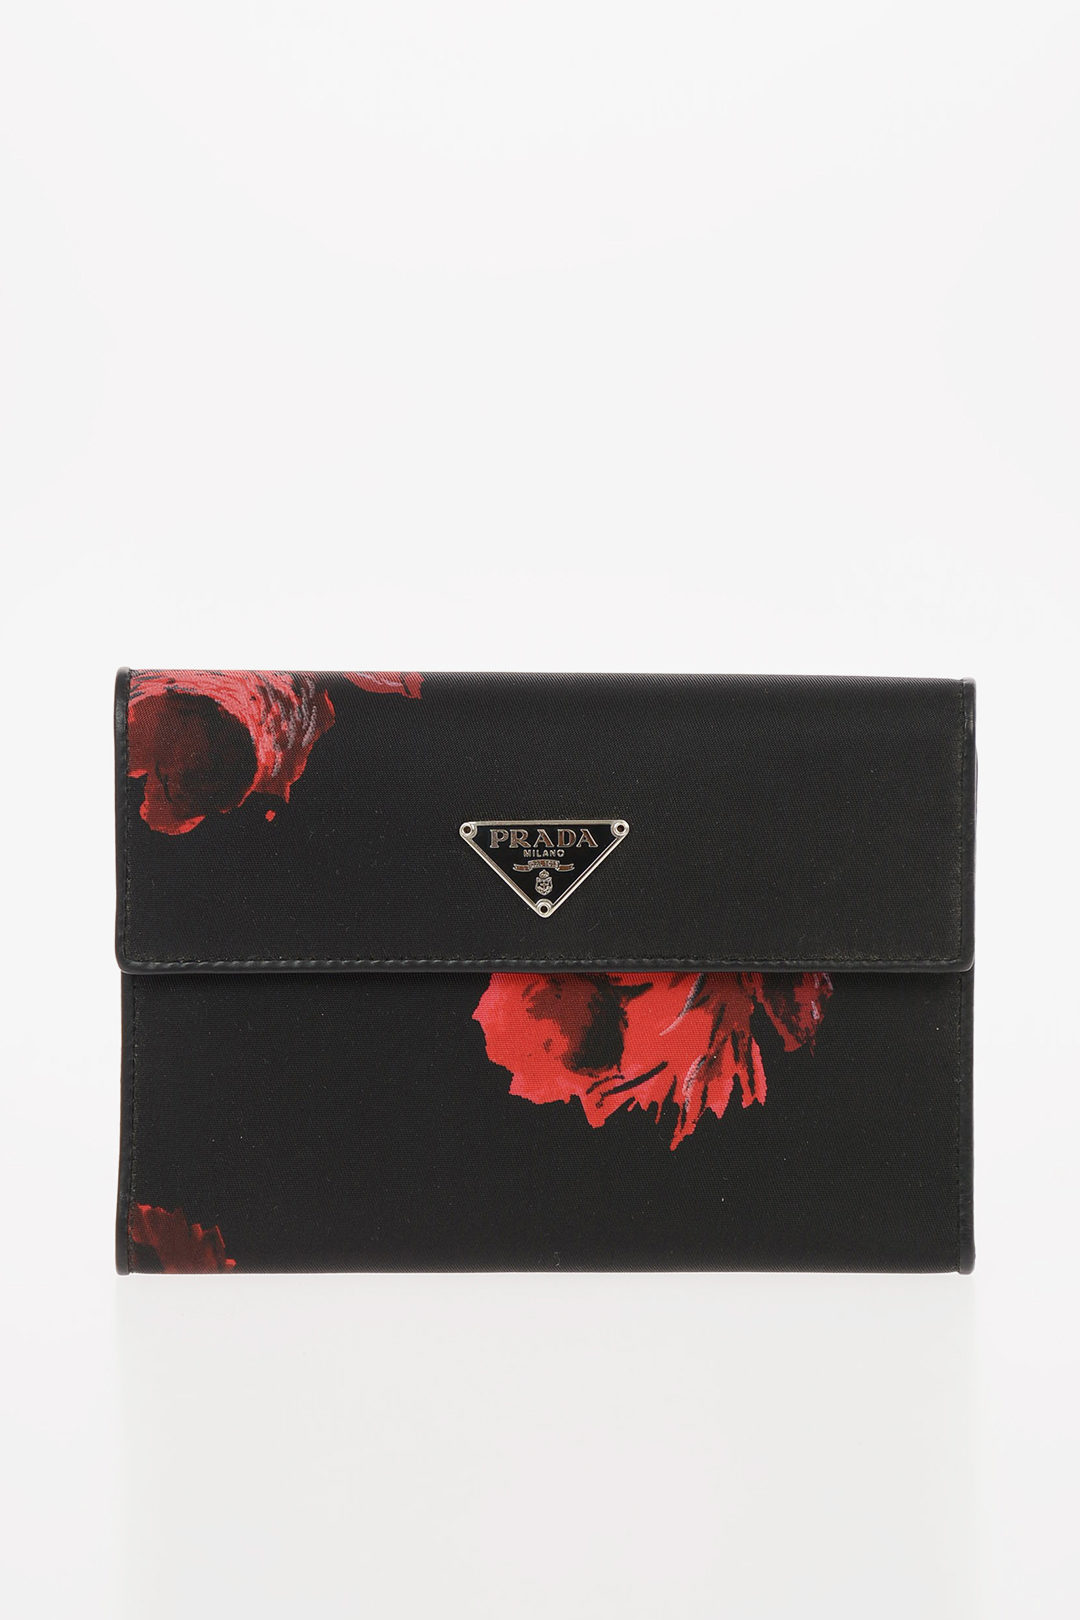 Top 91+ imagen prada floral wallet